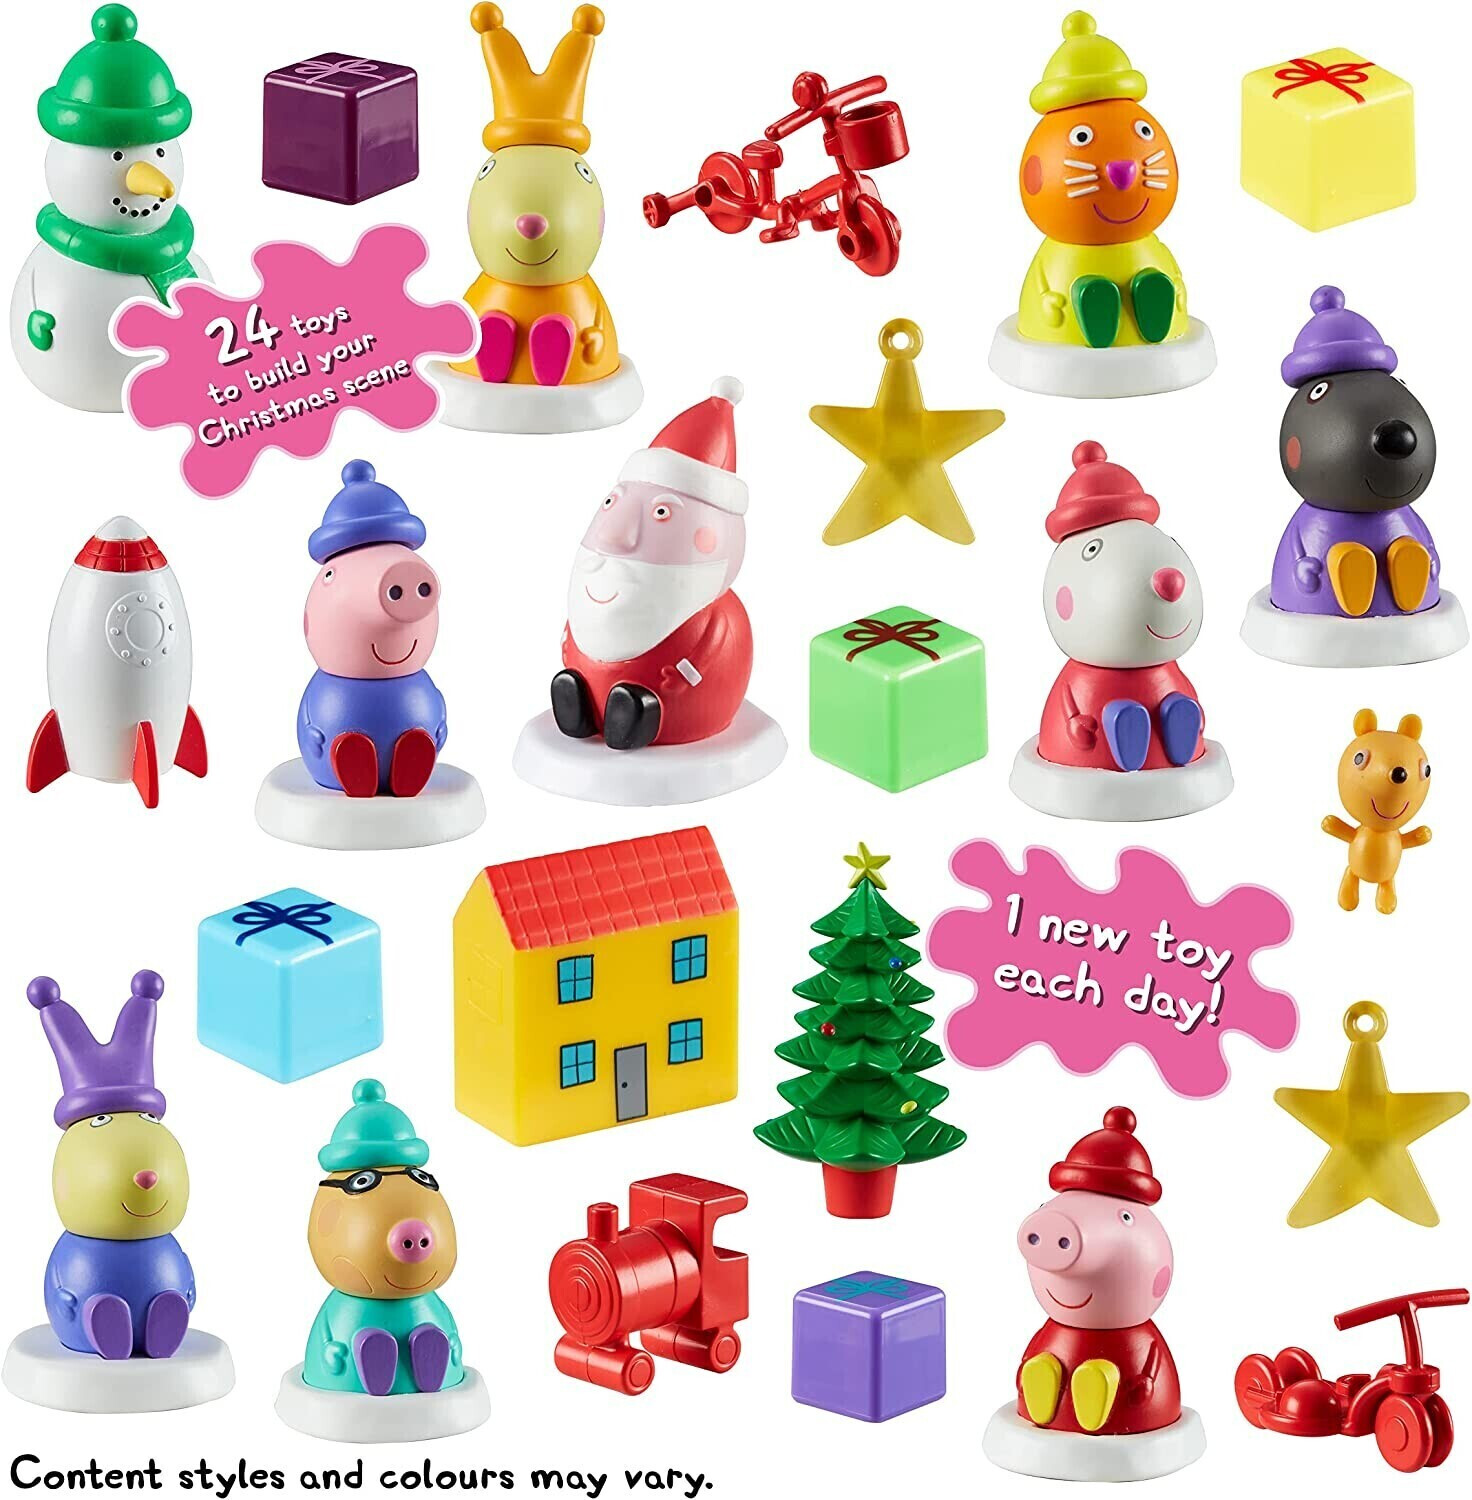 2021 Peppa Pig Holiday Advent Calendar for Kids, 24-Pieces